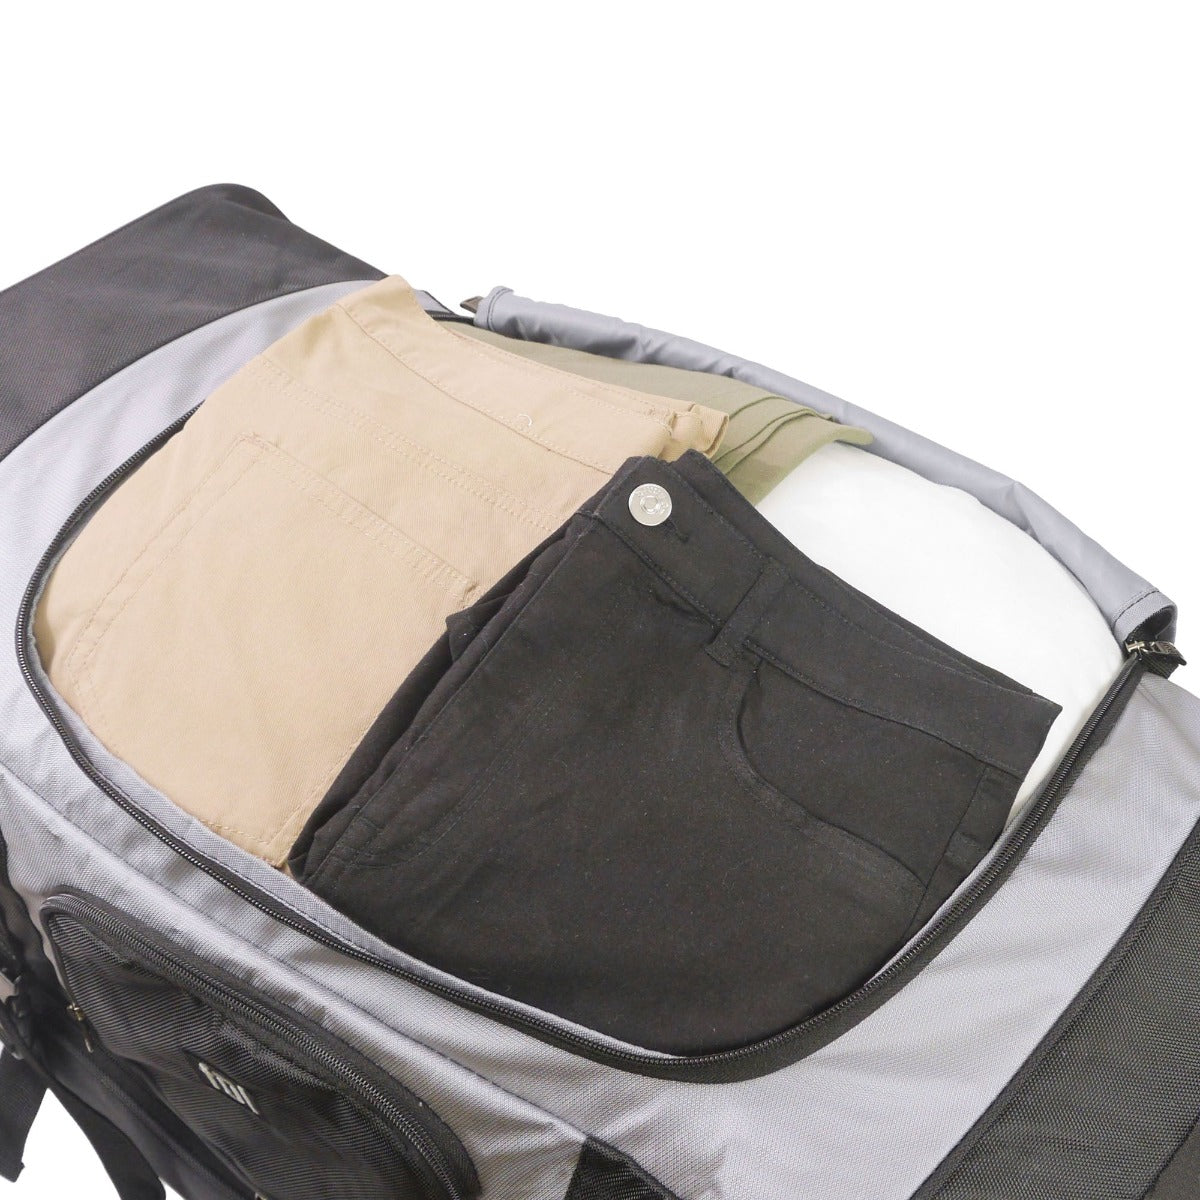 Black Rig Series 30 inch split level wheeled travel rolling duffle bag